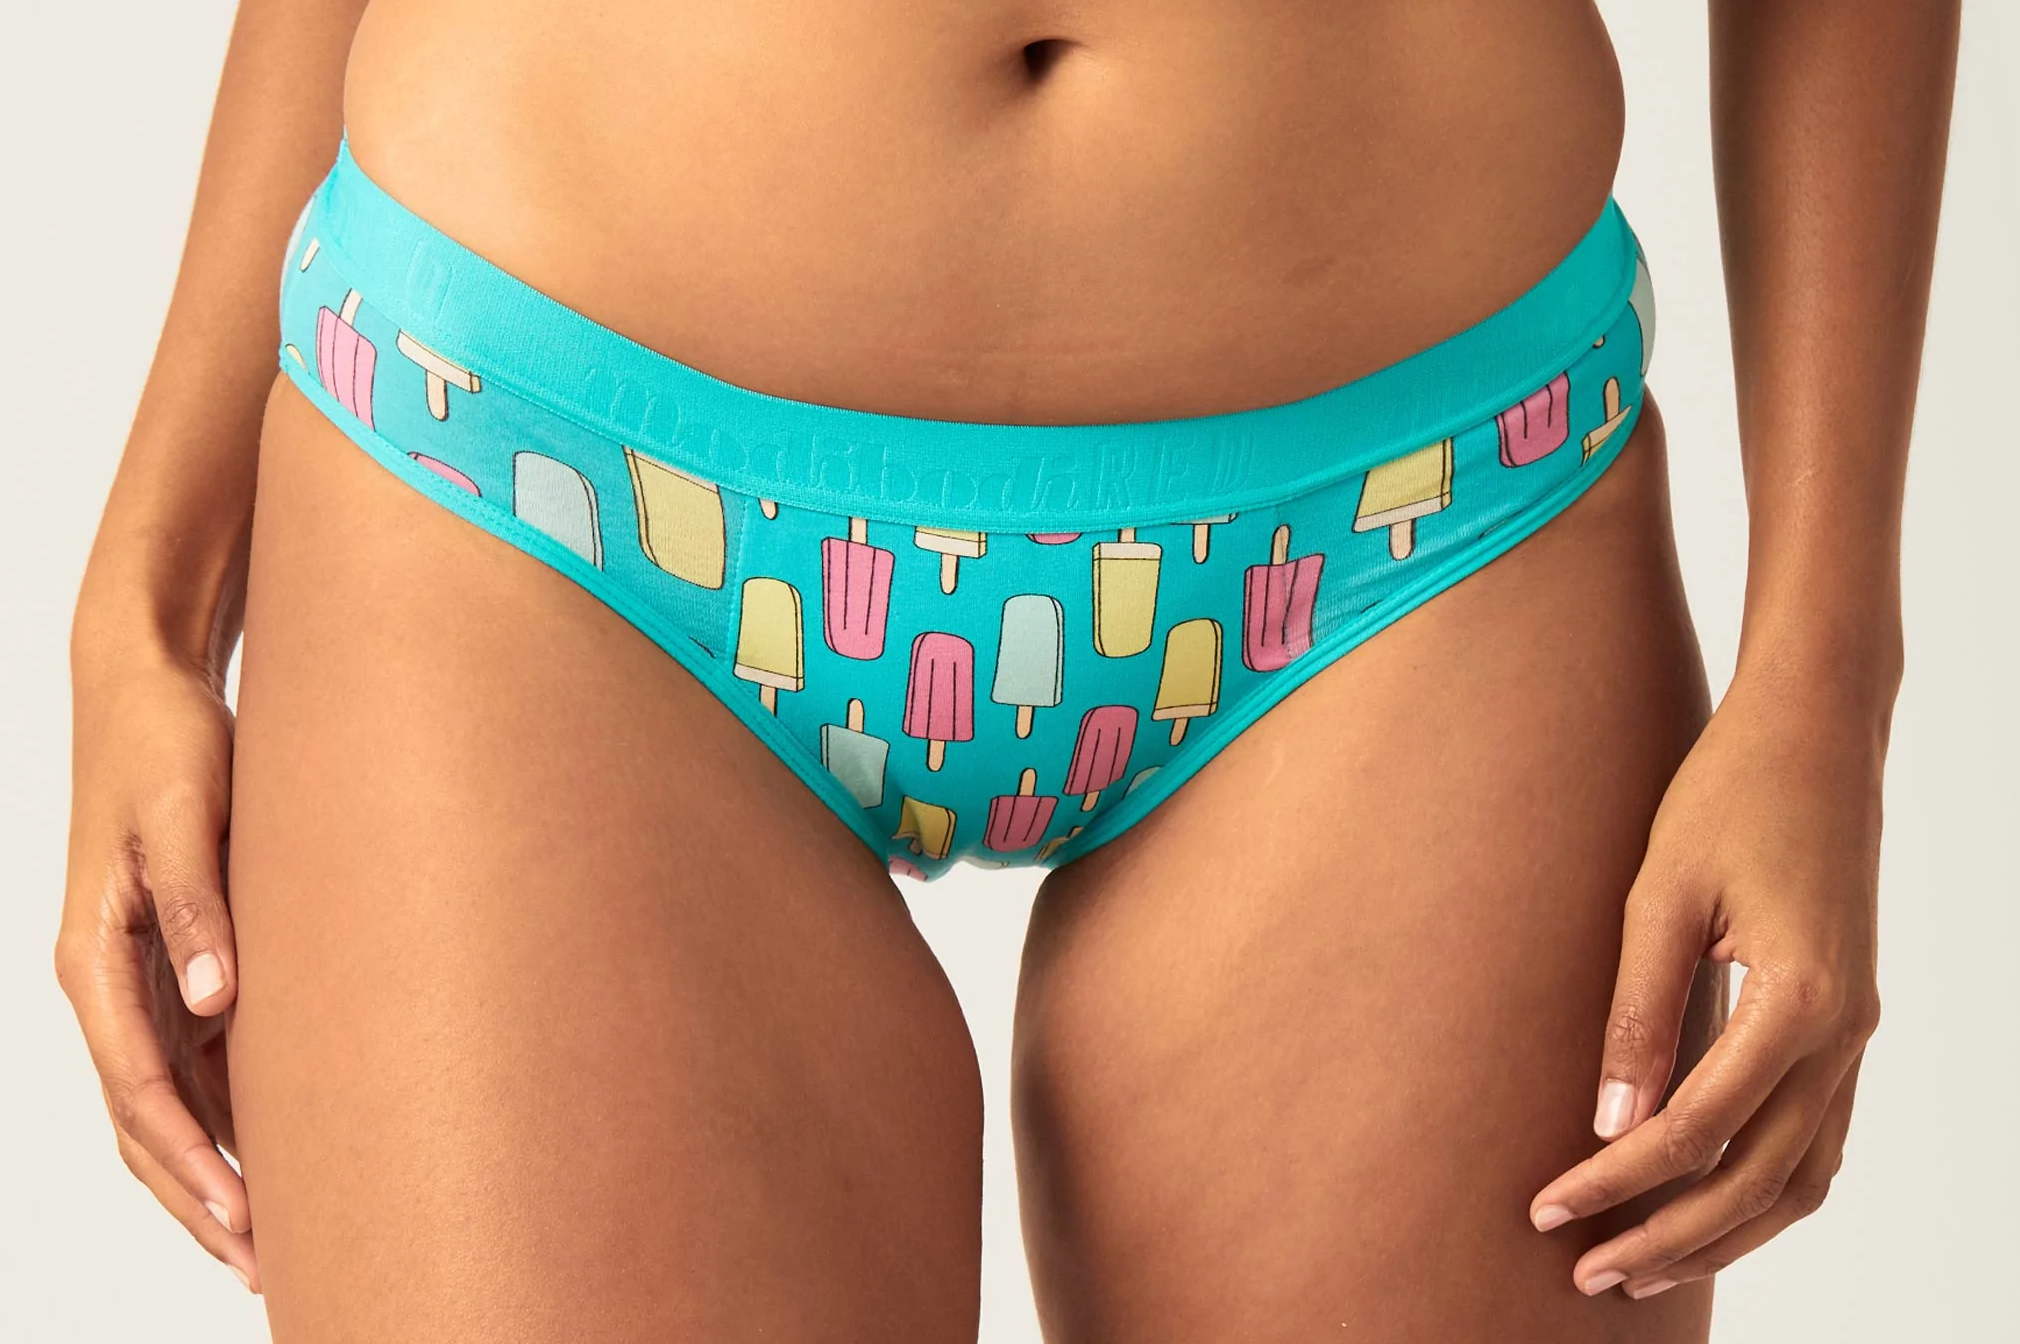 Period pants or underwear for girls under 10 — Berries & Bundles